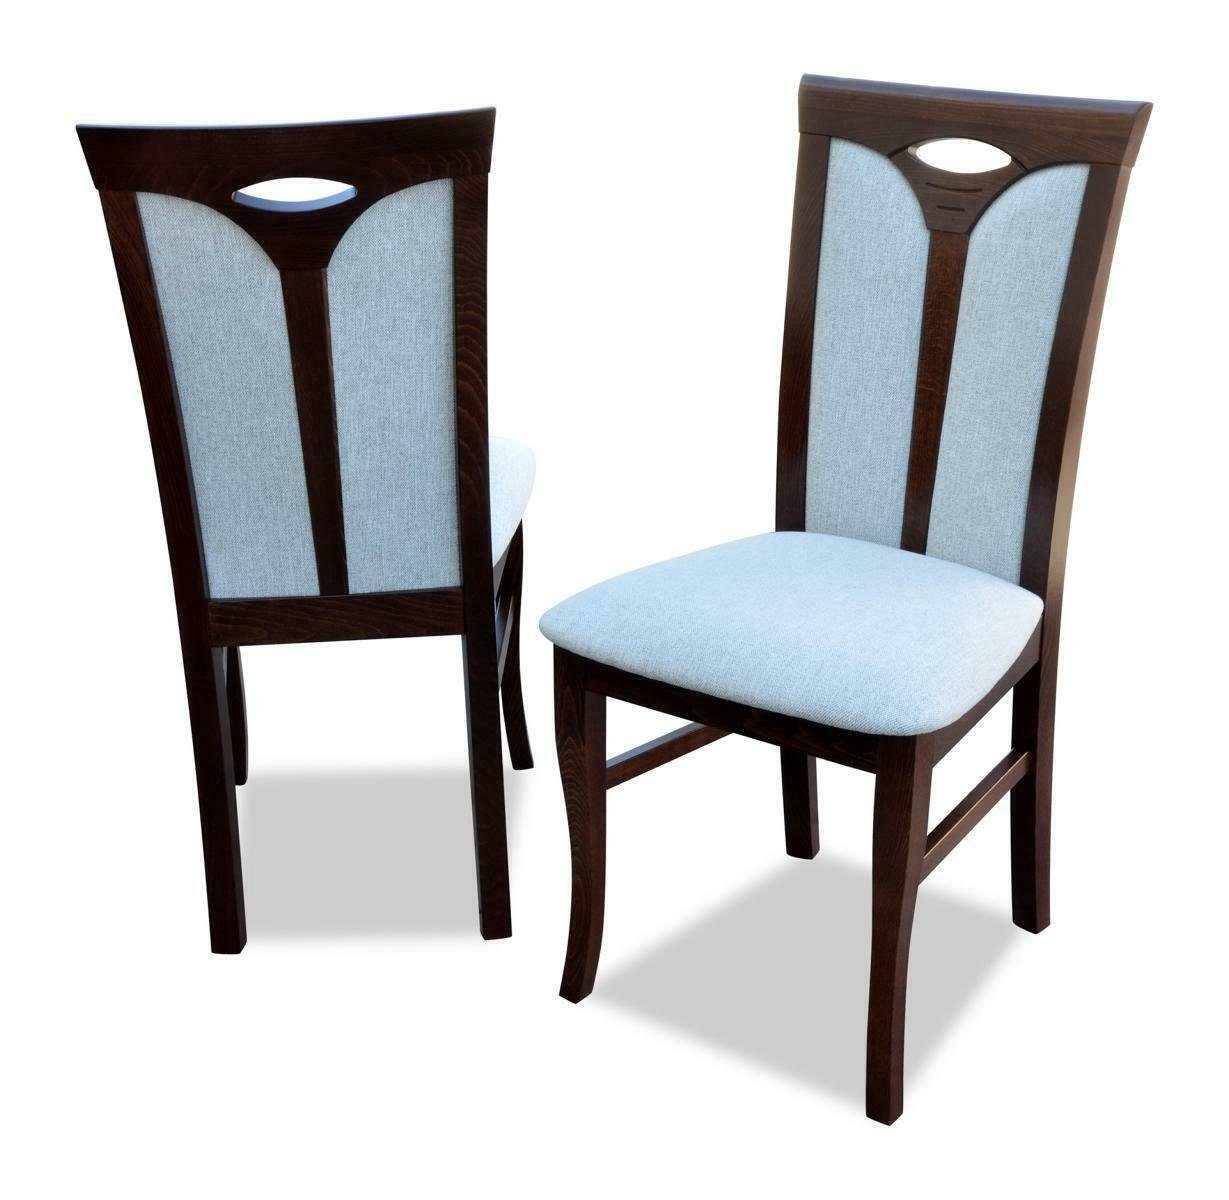 Gastro Garnitur Stuhl, Esszimmer Textil Stuhl 8x Stoff Design JVmoebel Lehnstuhl Holz Stühle Set